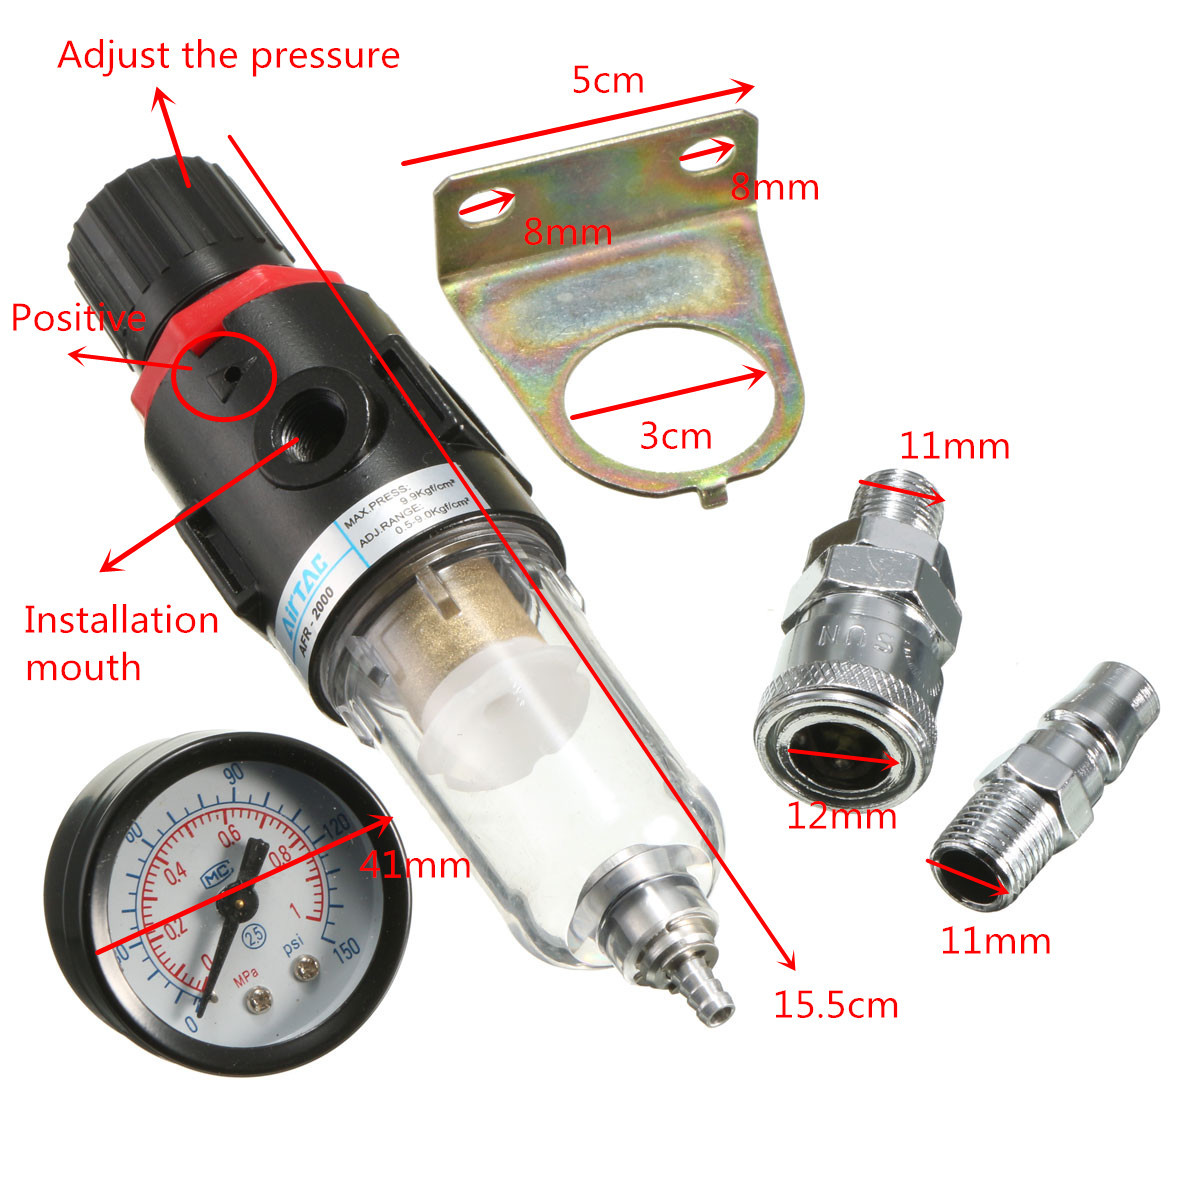 AFR-2000-14quot-Air-Compressor-Filter-Water-Separator-Trap-Tools-Kit-Regulator-Gauge-1043338-1